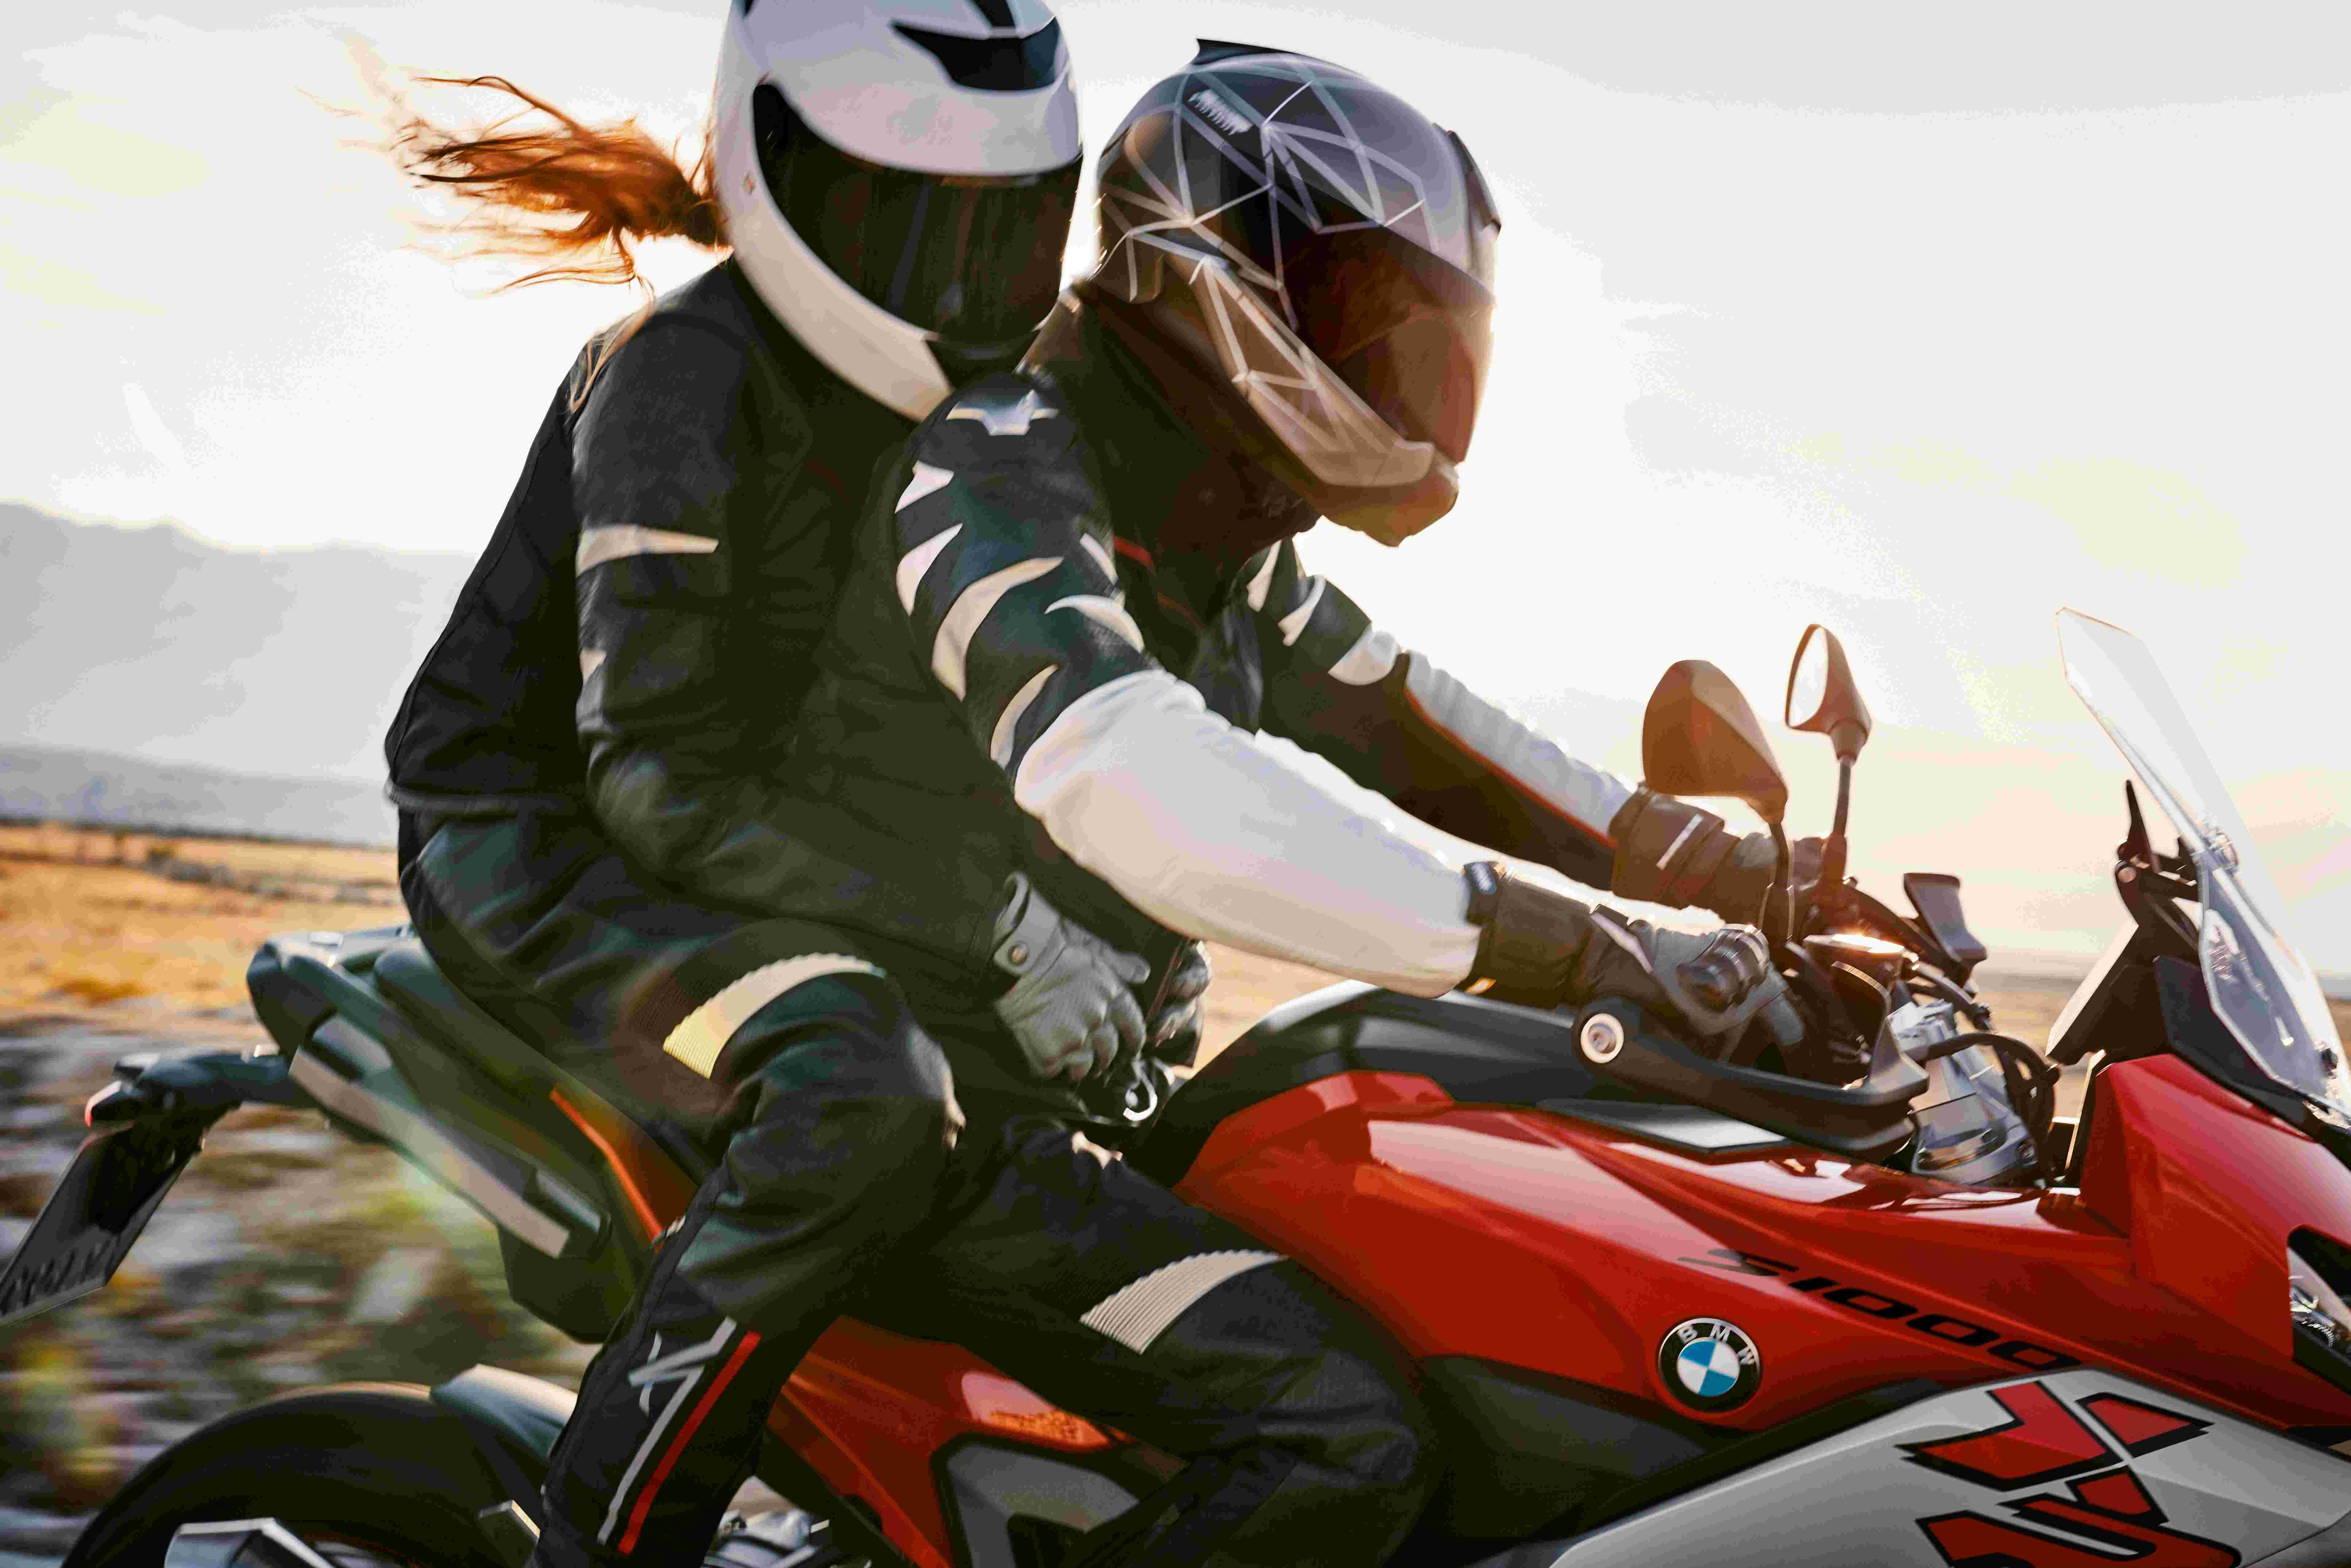 Bmw摩托车持续创新引领新时代骑行生活 数字化